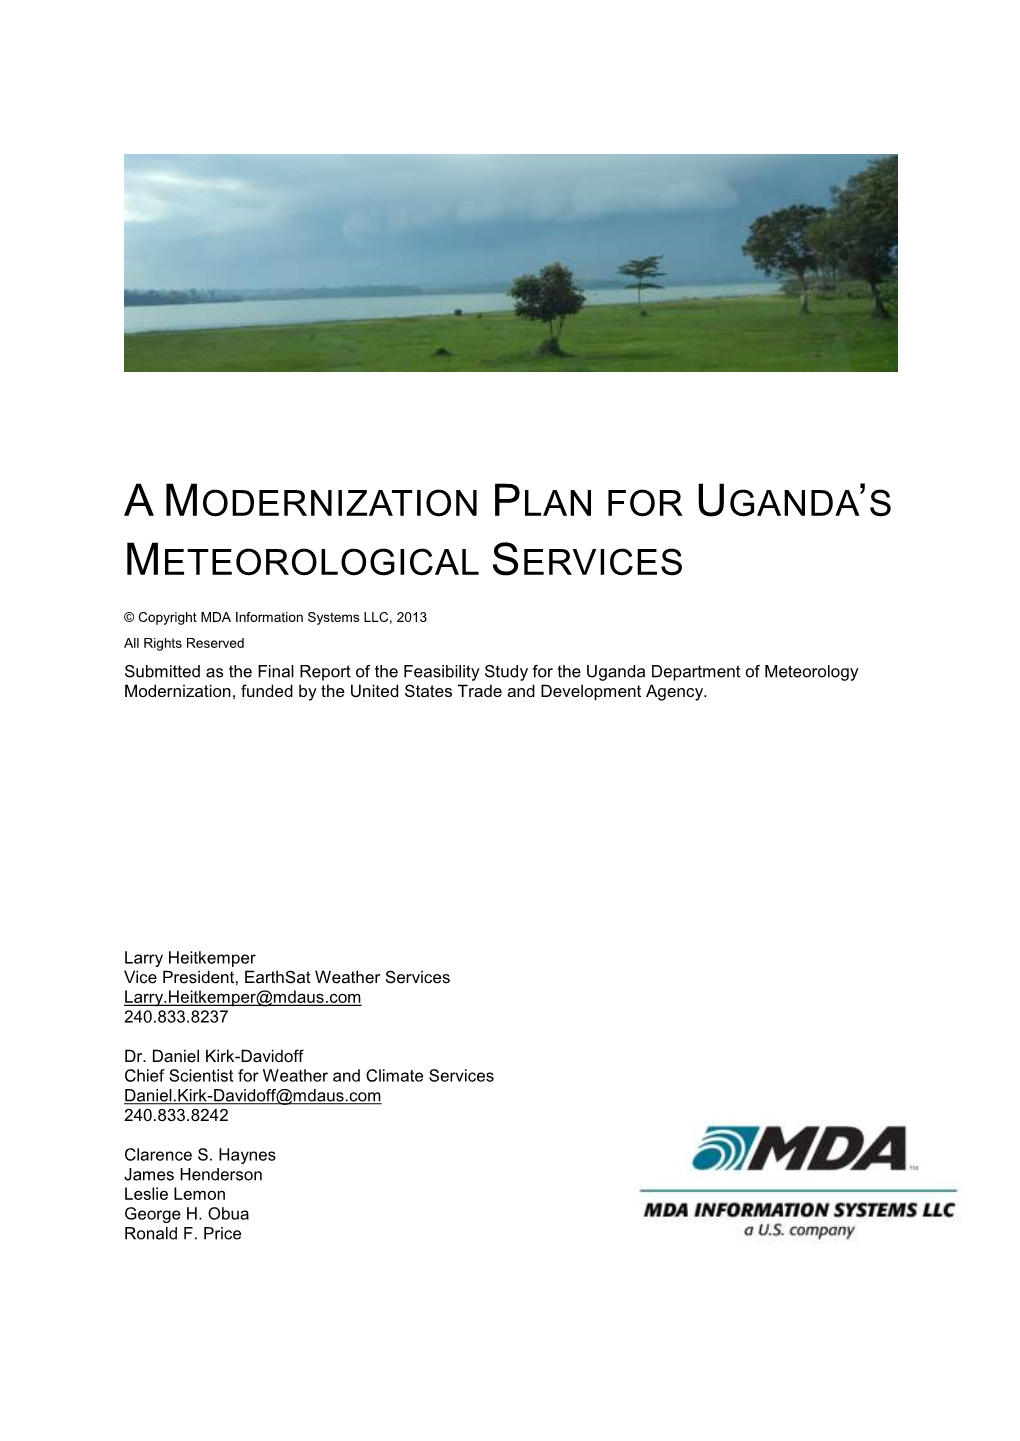 Amodernization Plan for Uganda's Meteorological Services